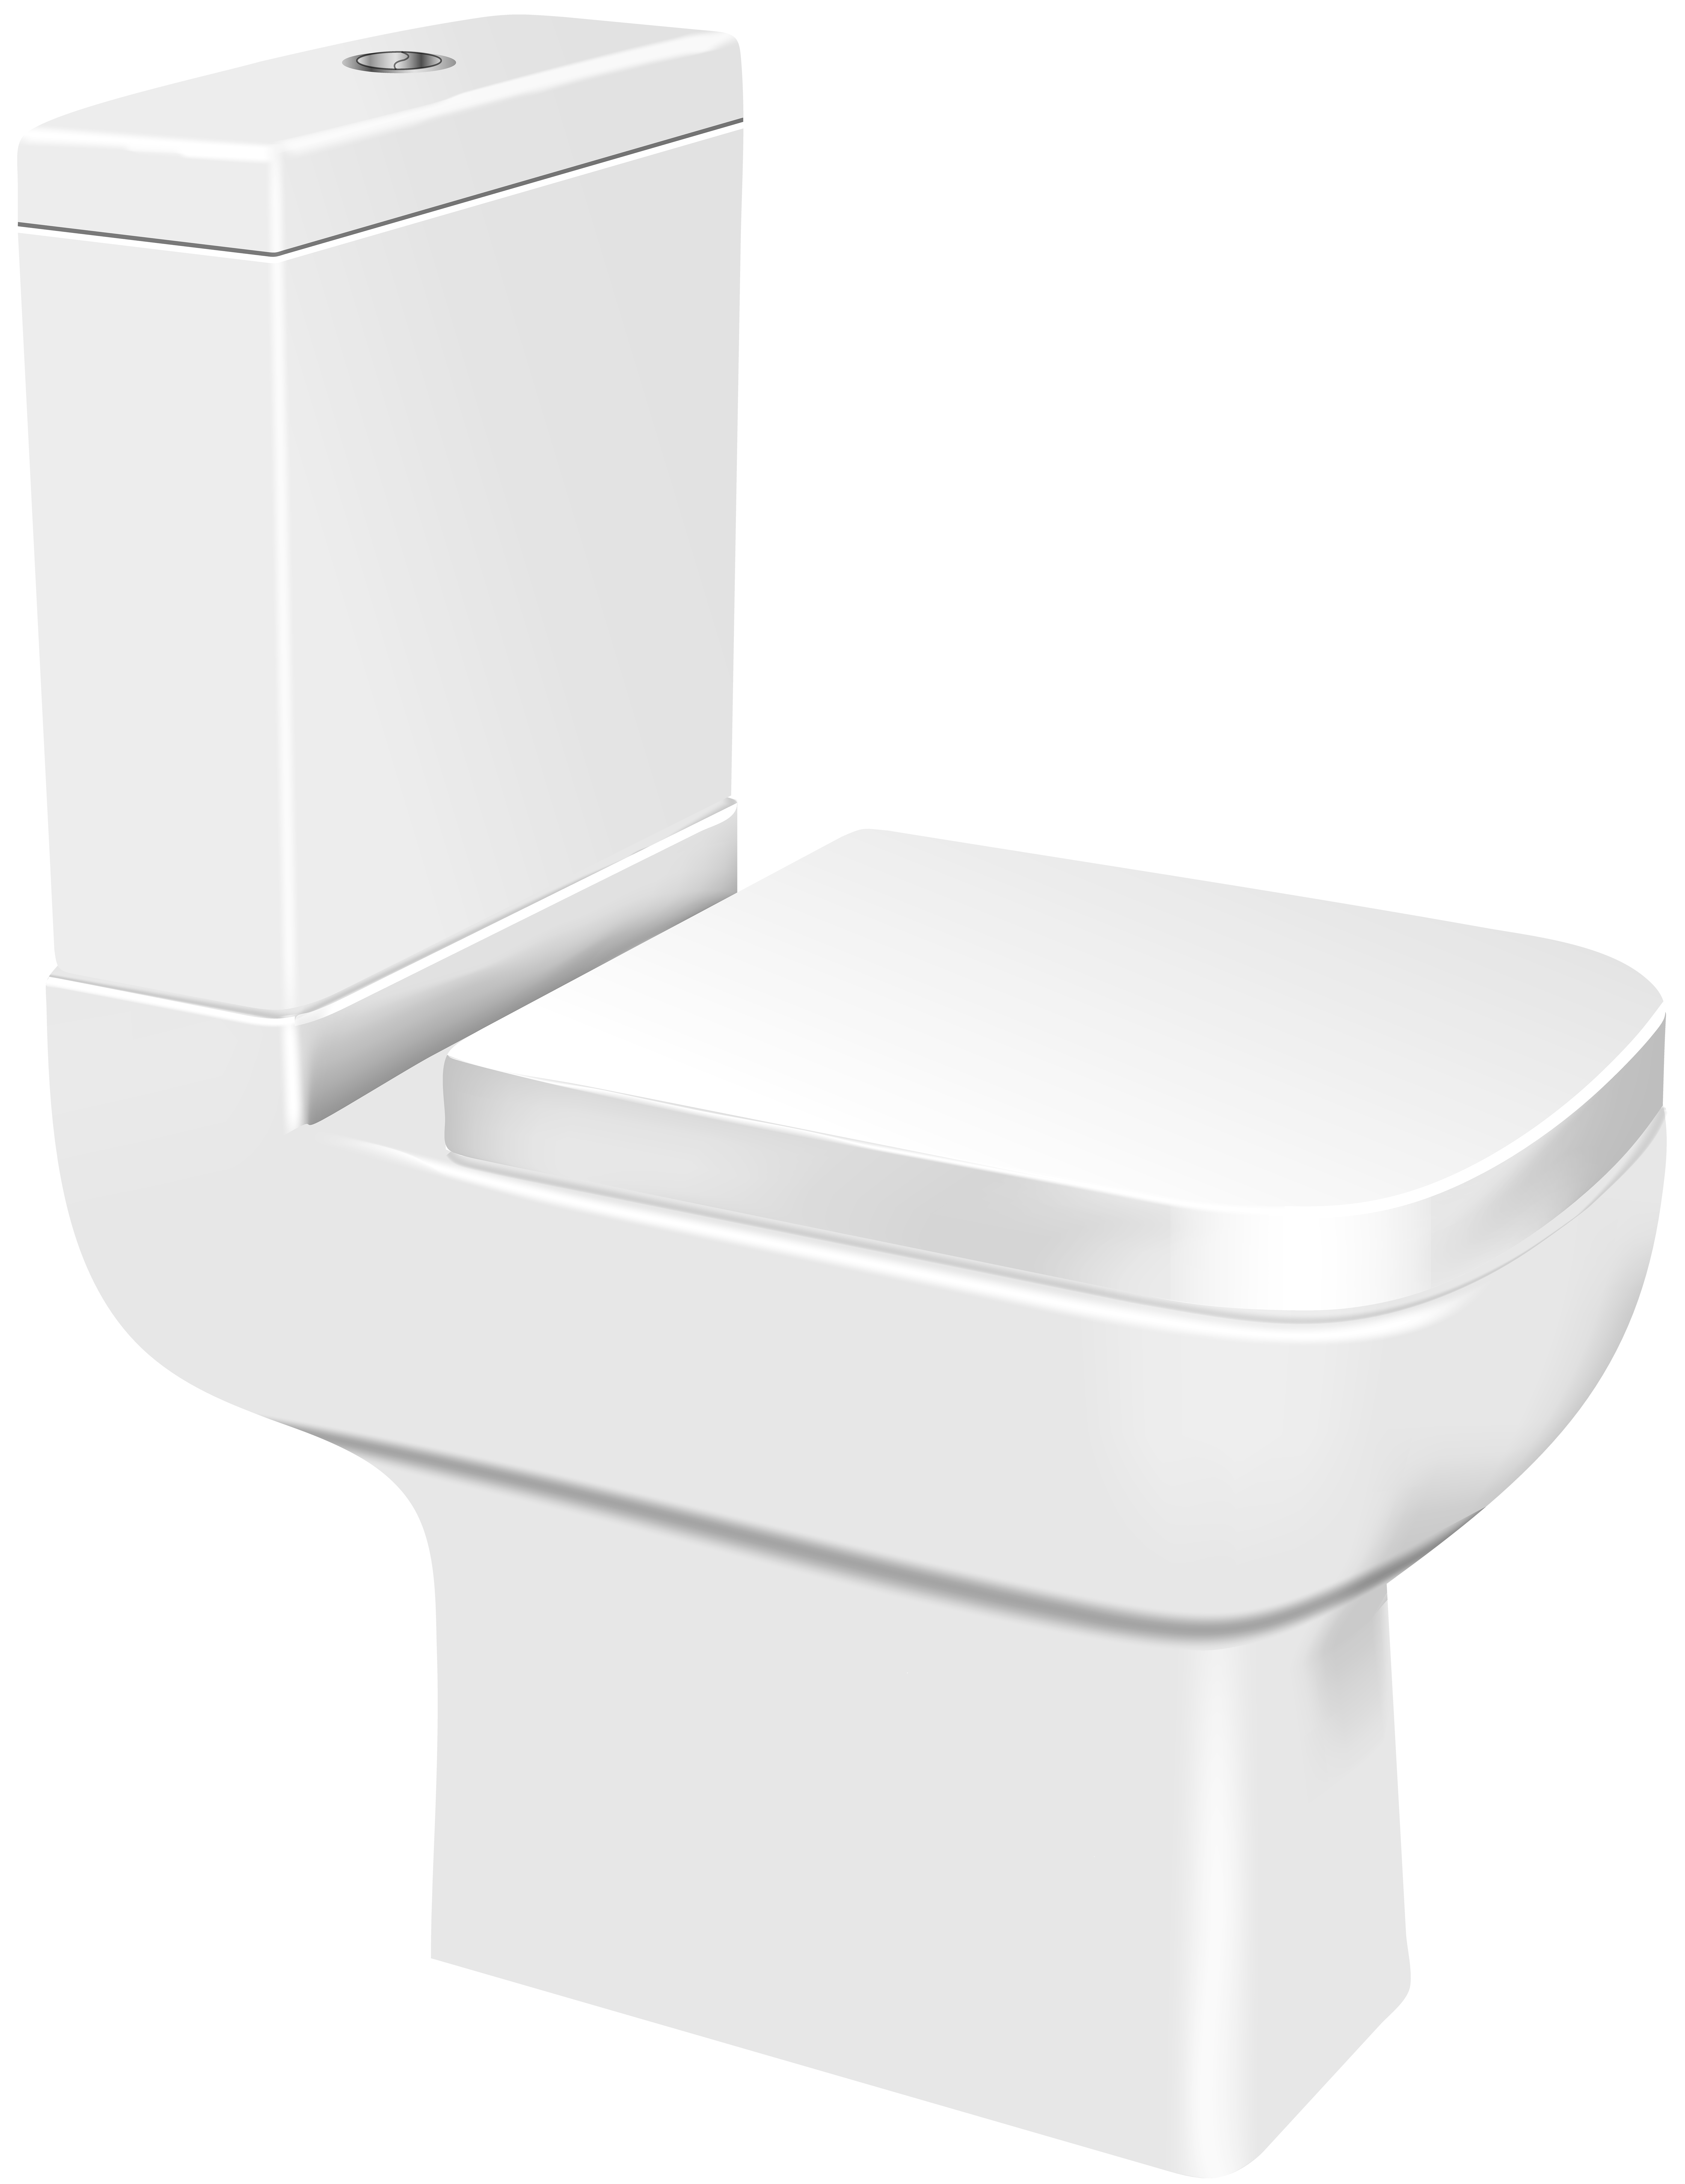 Mirror clipart toilet. White png clip art